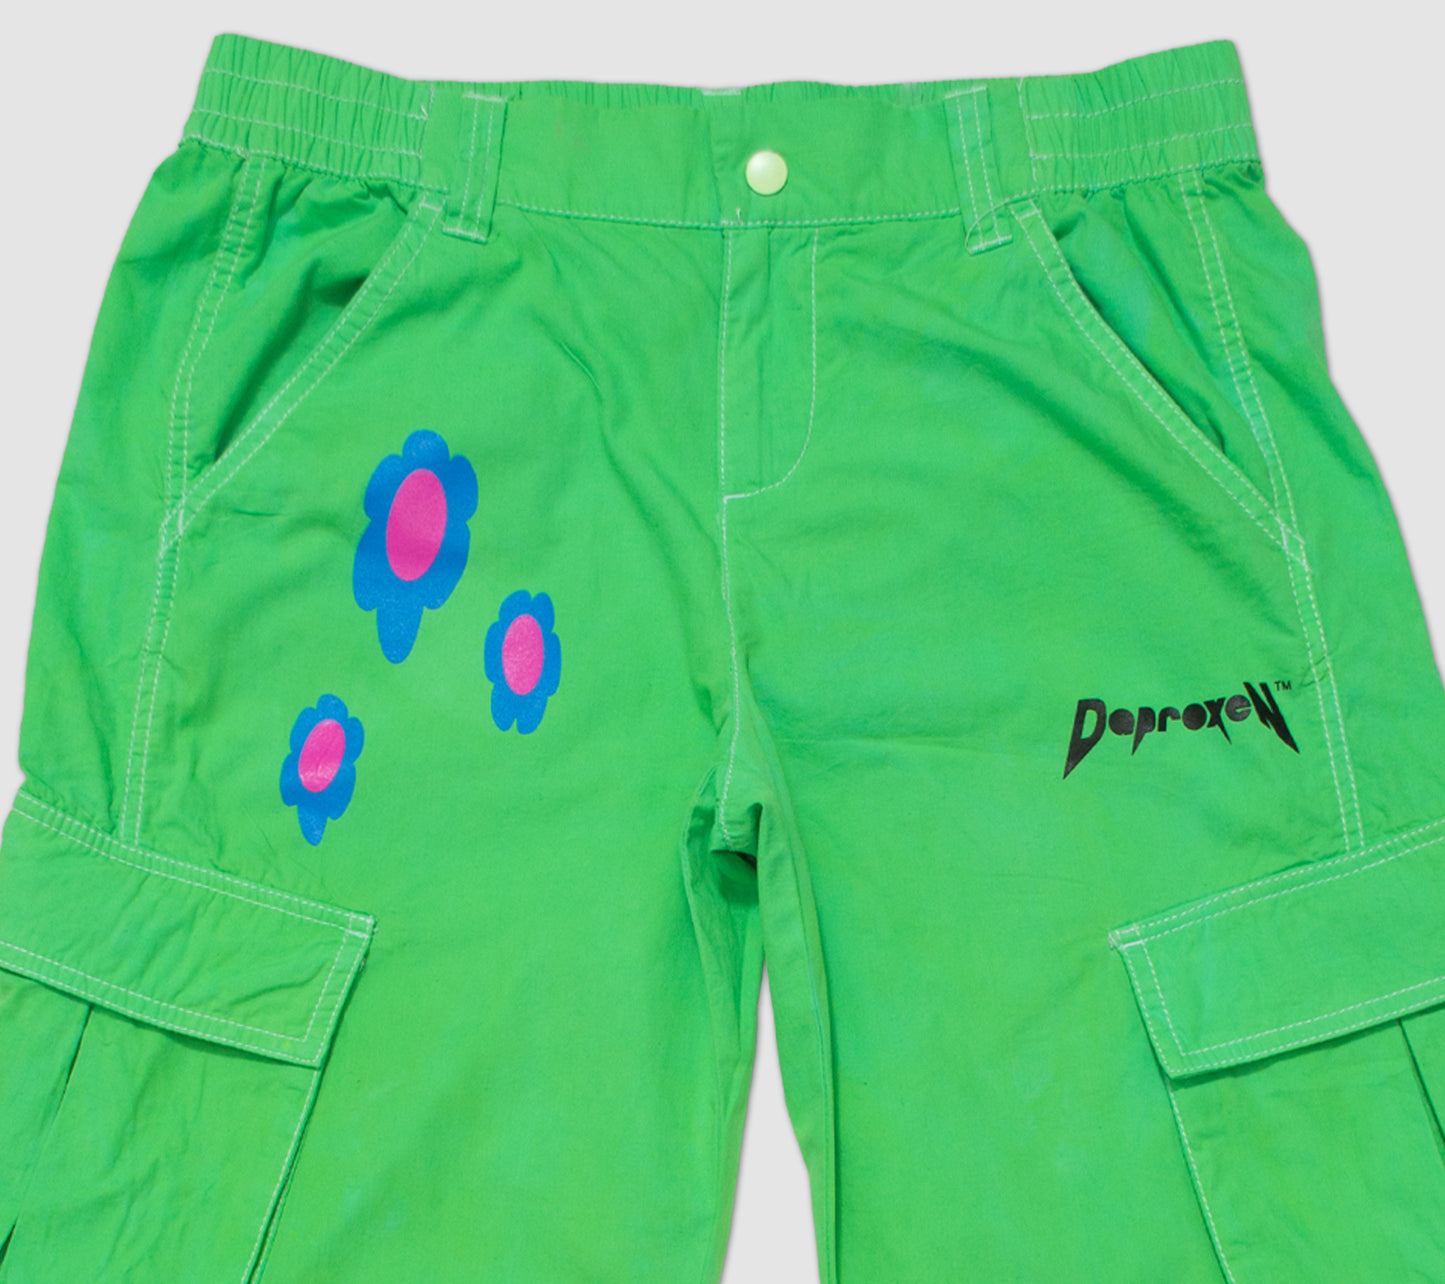 Daproxen™ Daisy Cargo Pants "Toxic World"